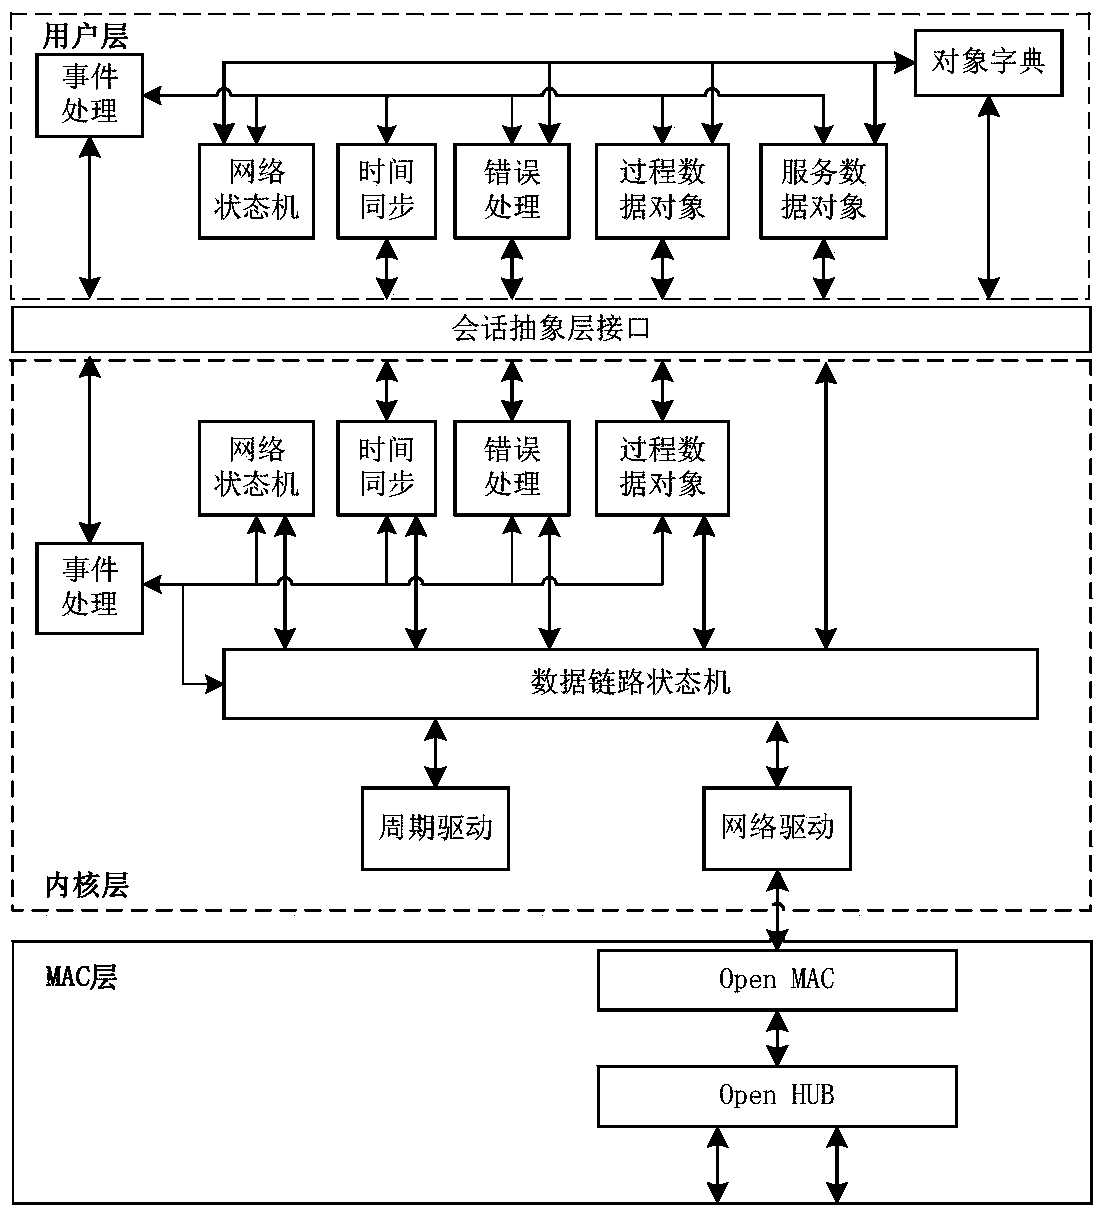 Design method of master/slave station cards for implementing Powerlink industrial real-time Ethernet communication